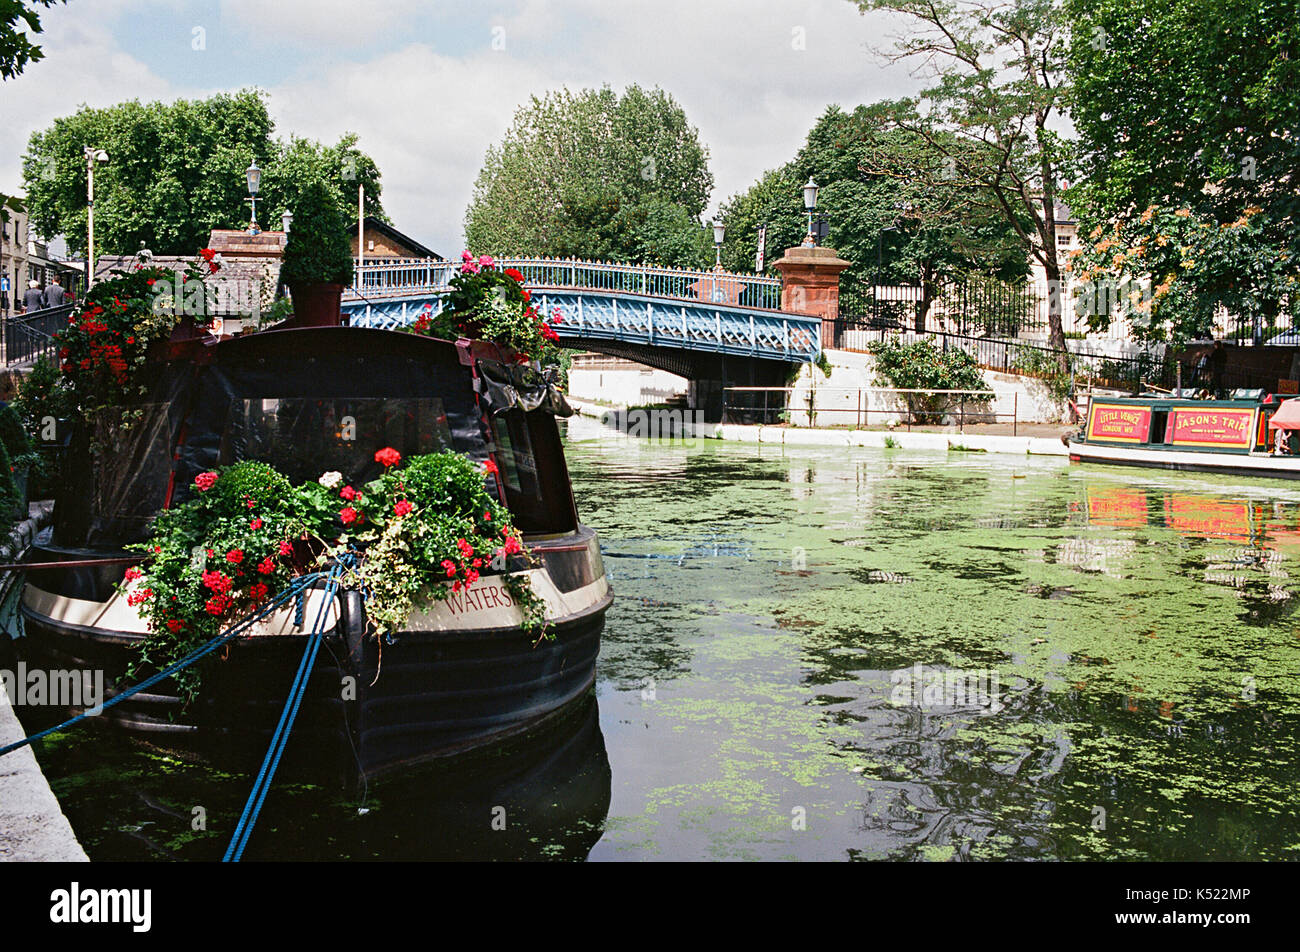 Little Venice, on the Regents Canal, near Maida Vale, London, UK Stock Photo